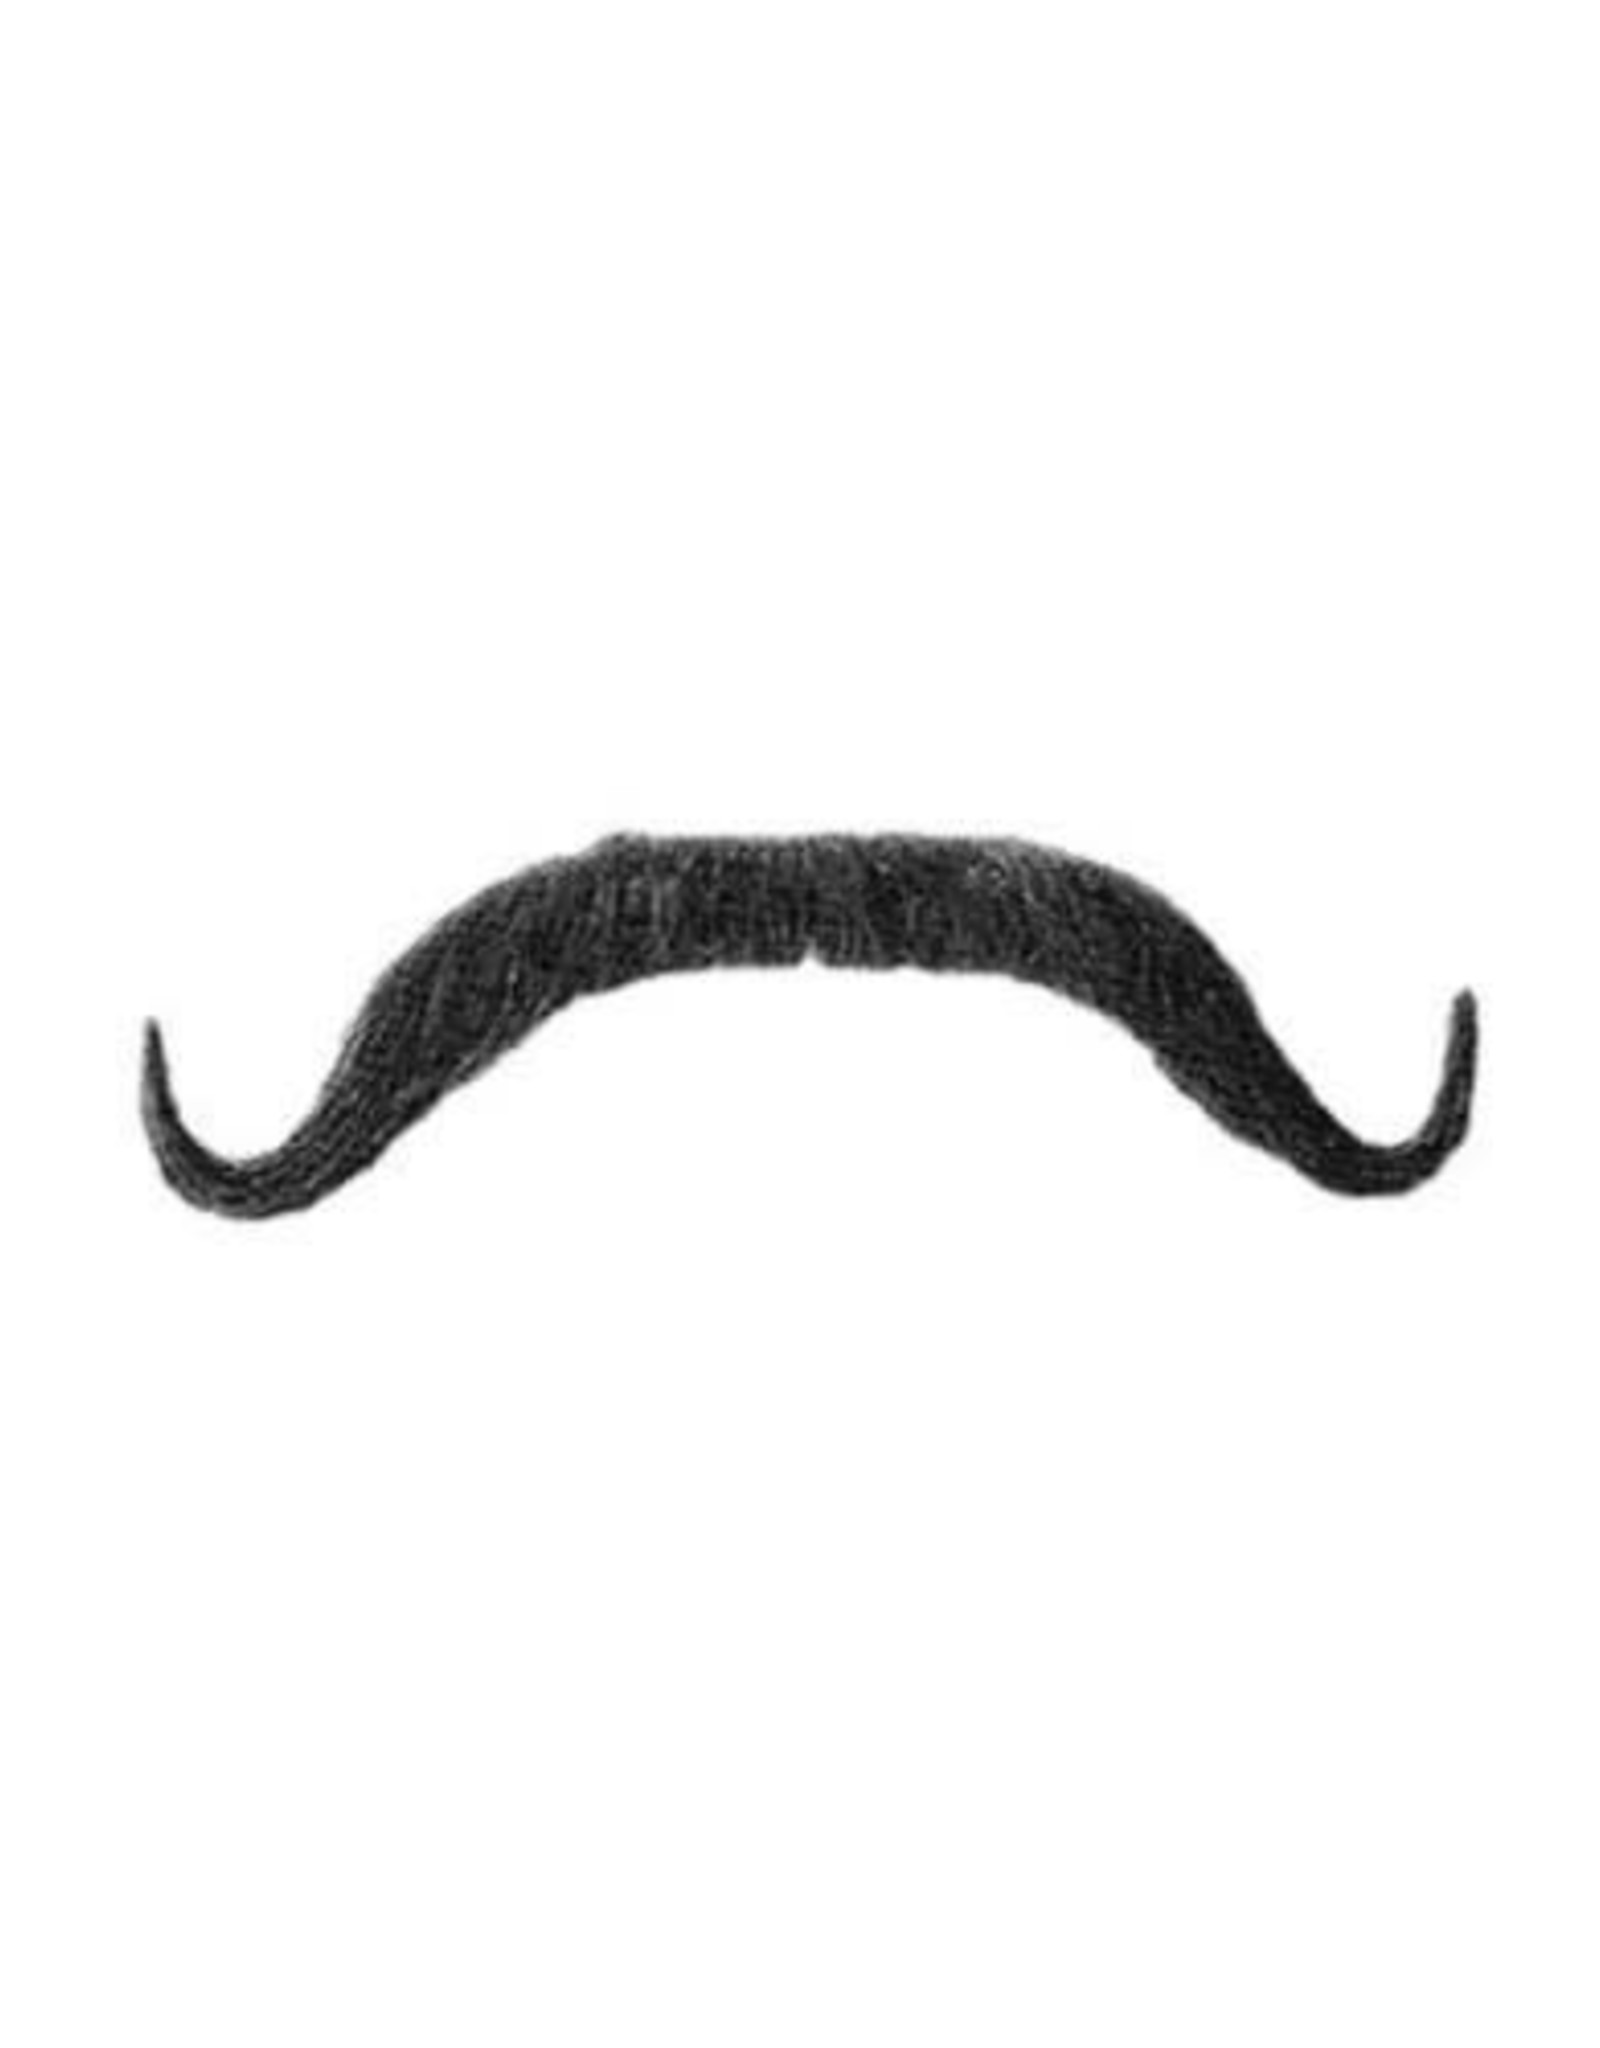 Hm Smallwares Ltd. Mukateers Mustache